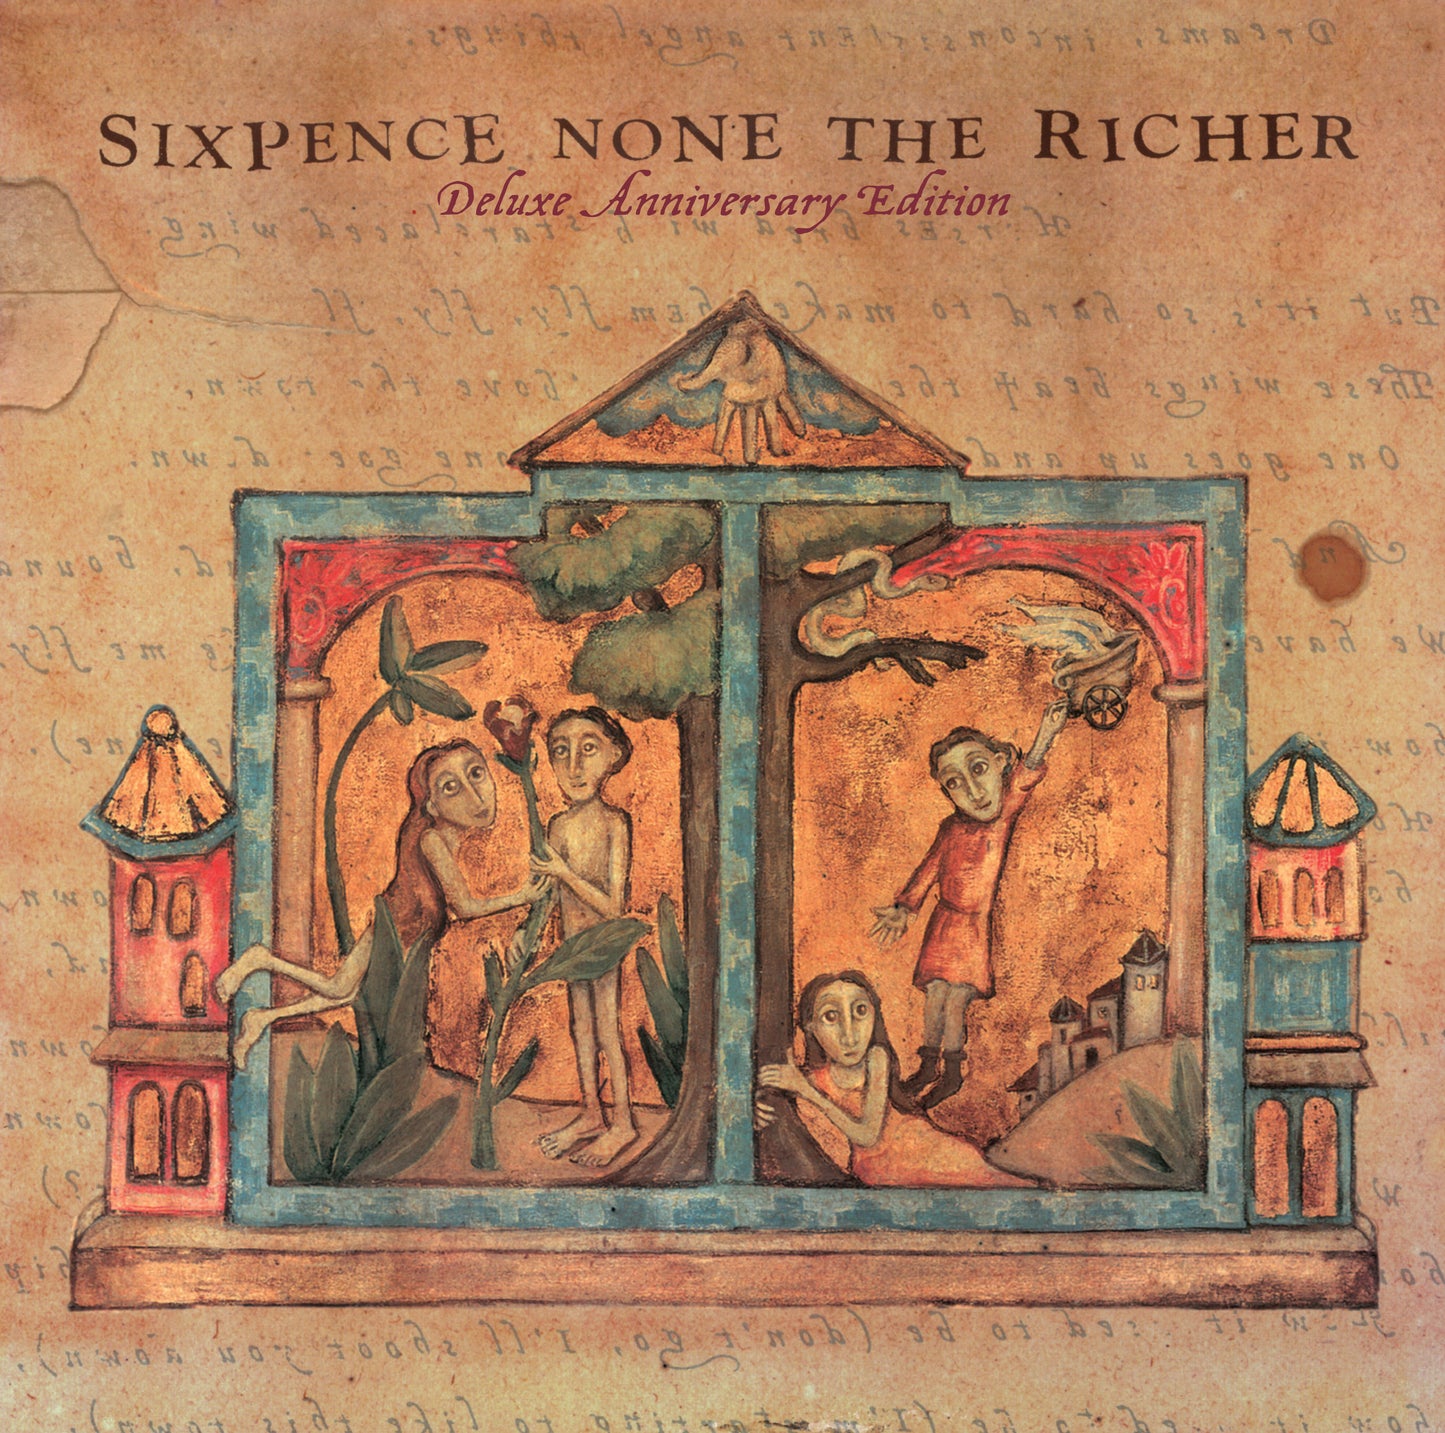 Sixpence None The Richer "Sixpence None The Richer (Deluxe Anniversary Edition)" 2xLP